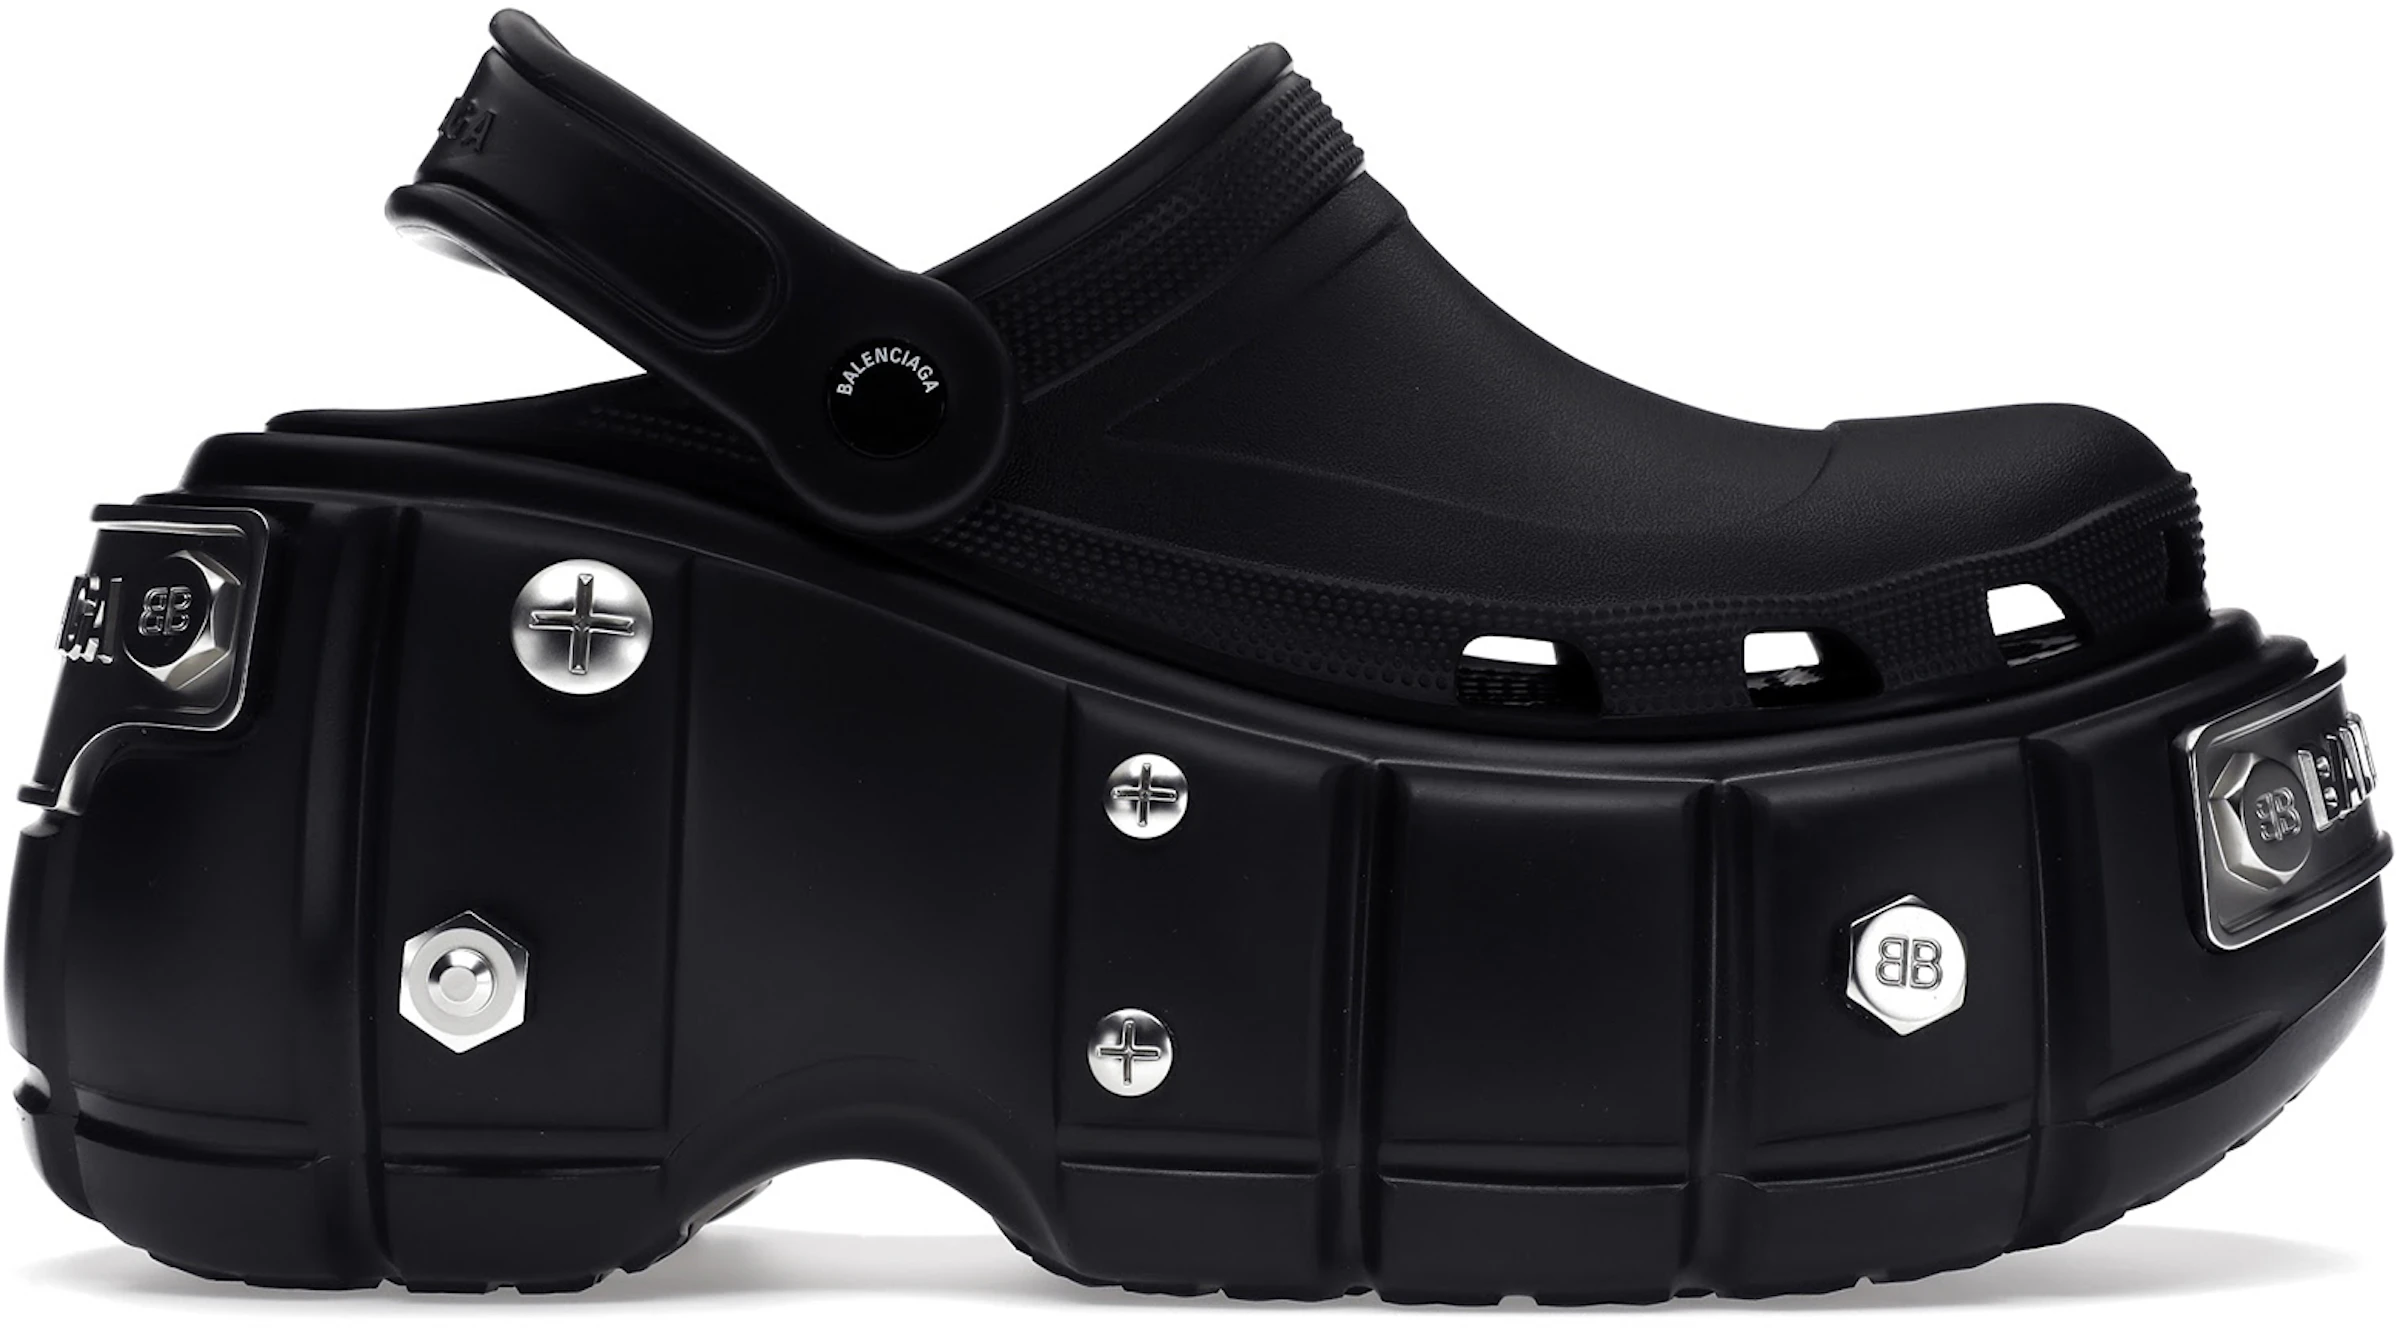 Balenciaga x Crocs Hardcrocs Sandal Black - 687397W1S8N1081 /  687398W1S8N1081 - US